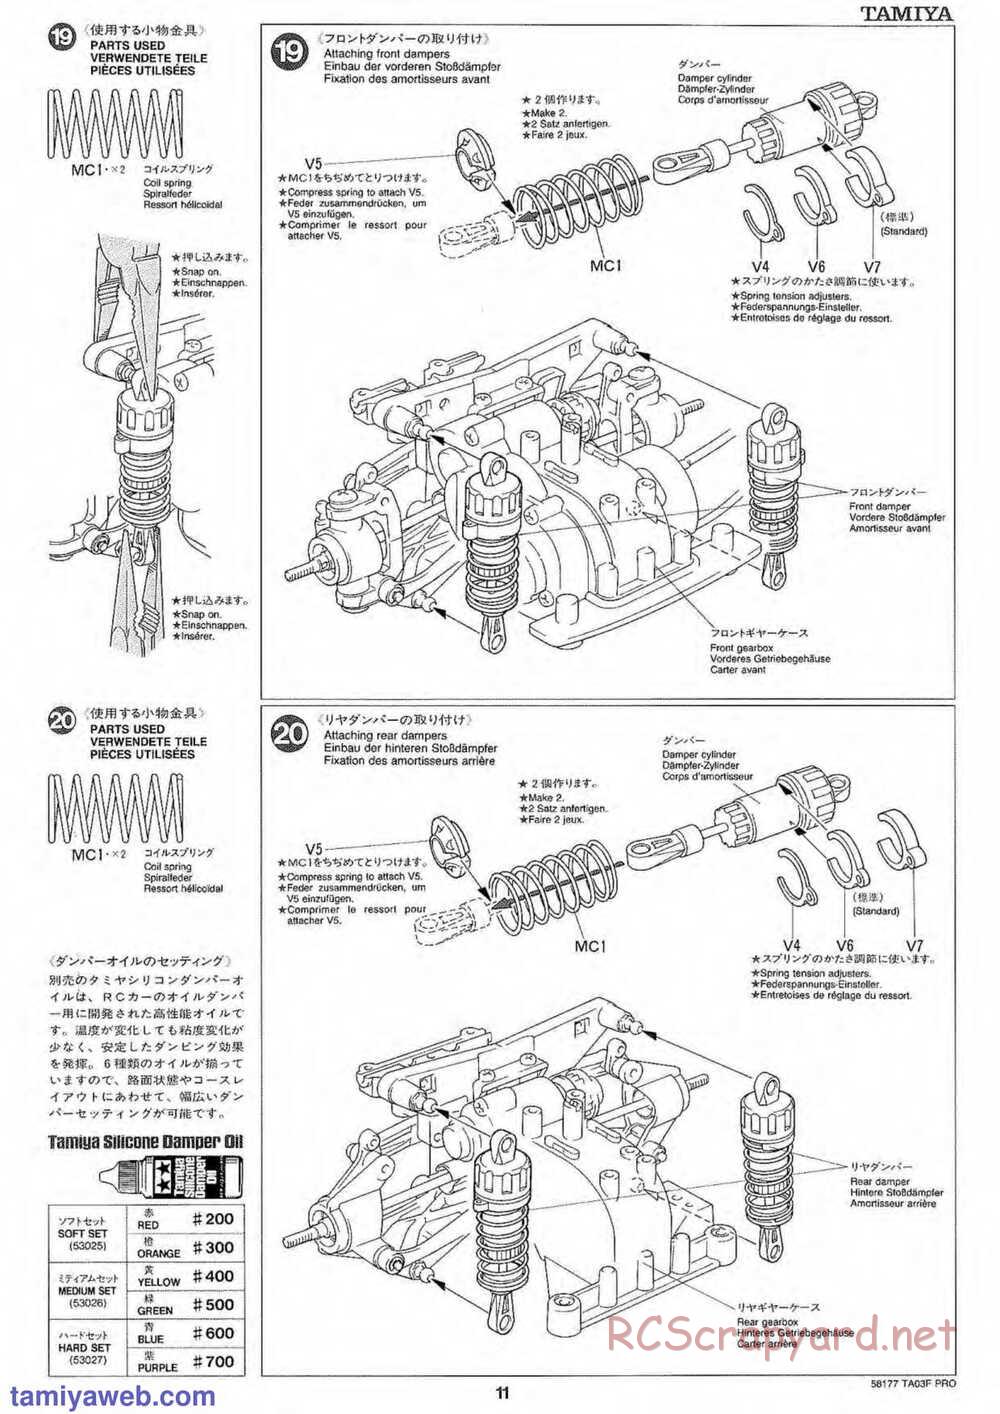 Tamiya - TA-03F Pro Chassis - Manual - Page 11